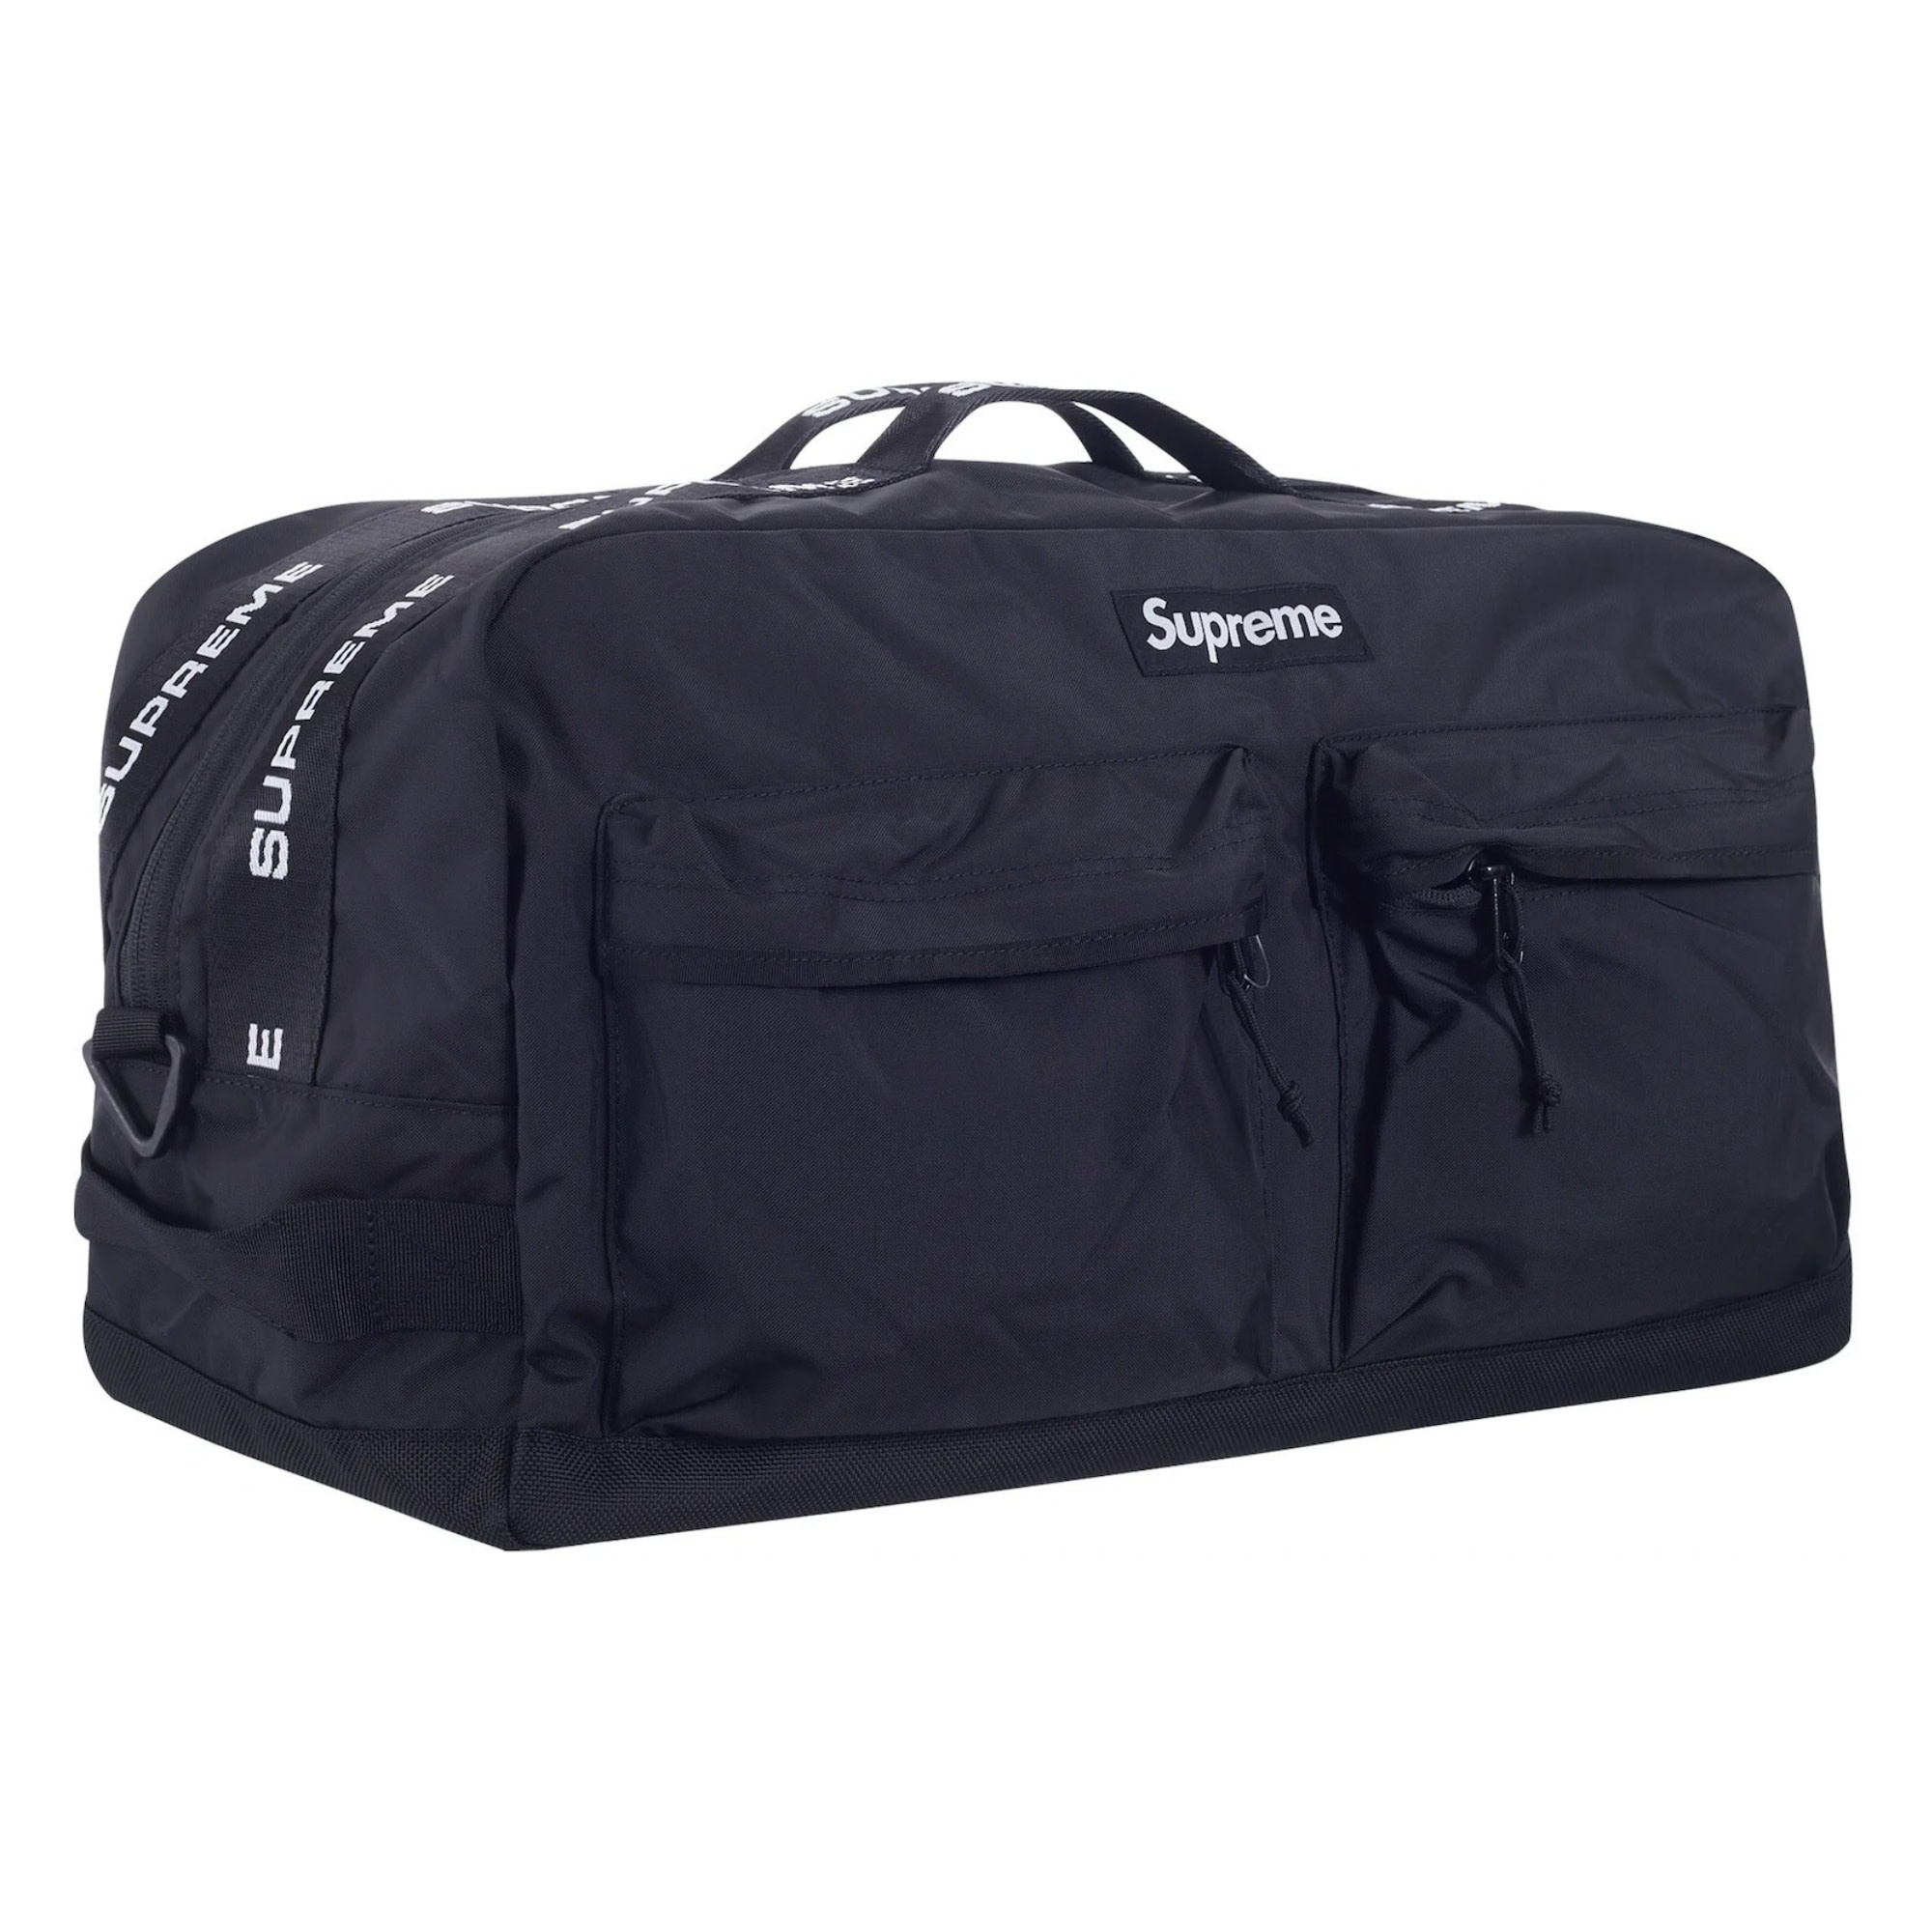 supreme luggage black